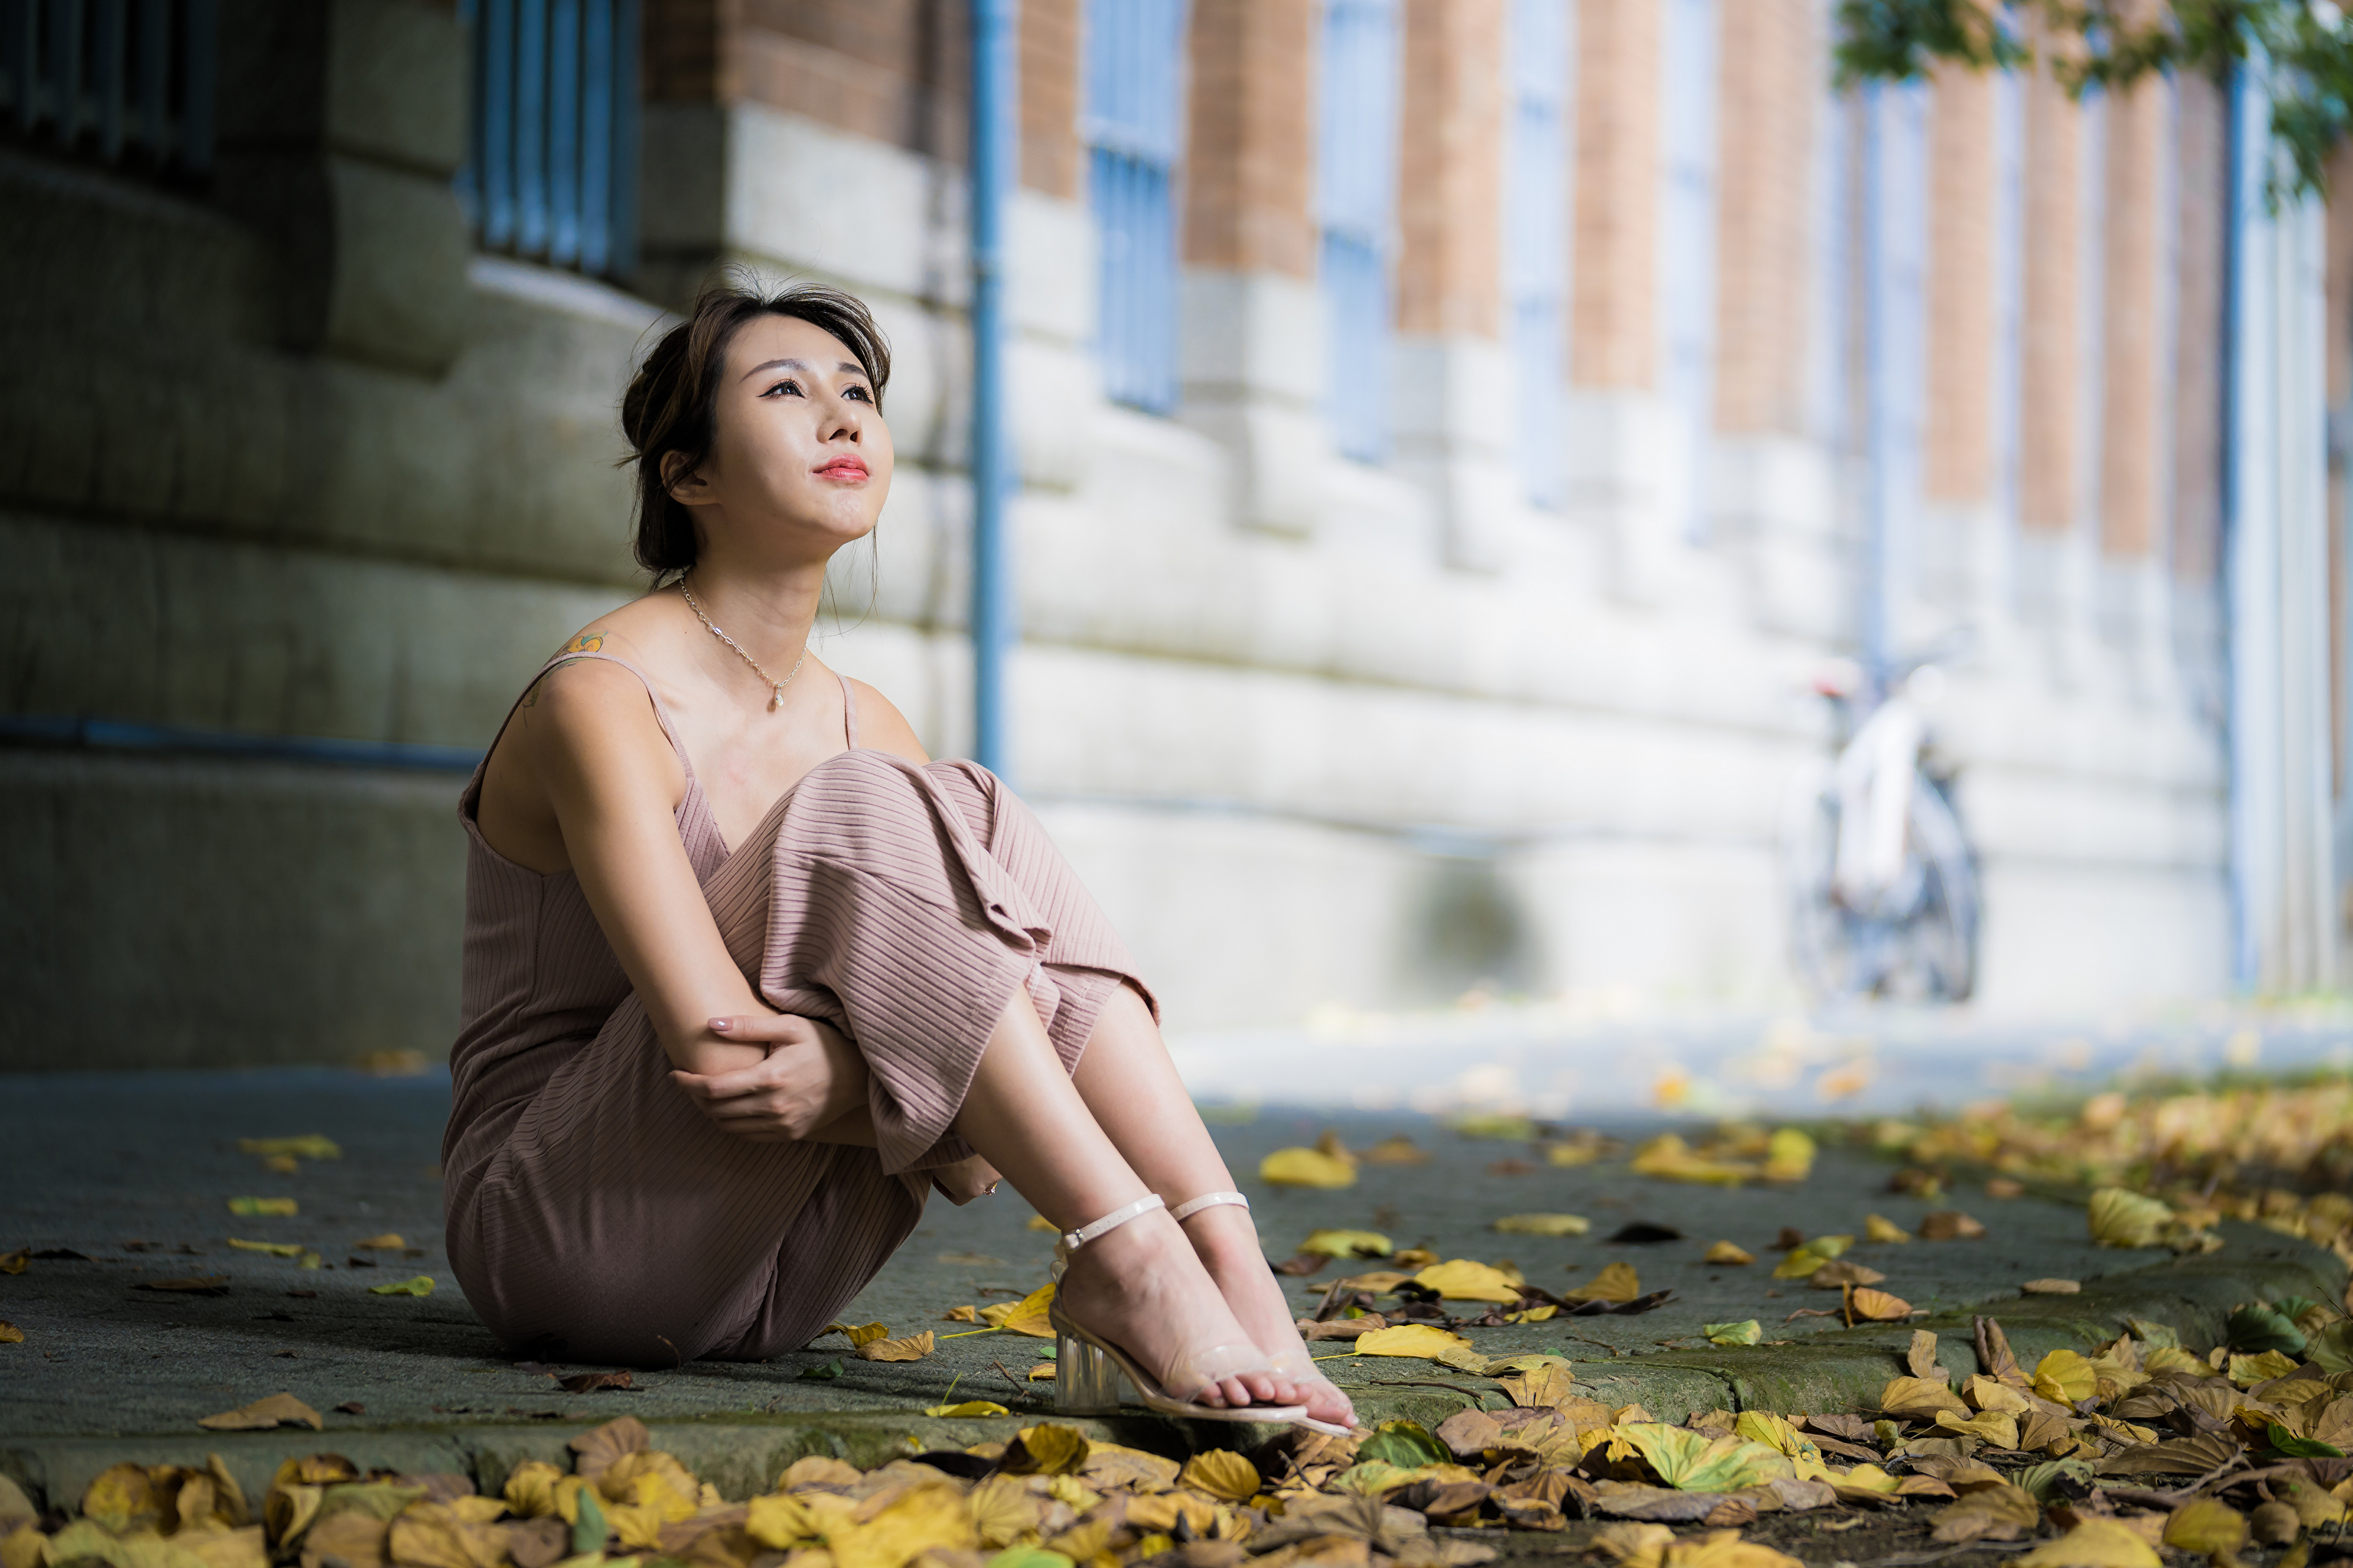 Asian Model Women Depth Of Field Long Hair Dark Hair Women Outdoors Sitting Barefoot Sandal Leaves L 3840x2559